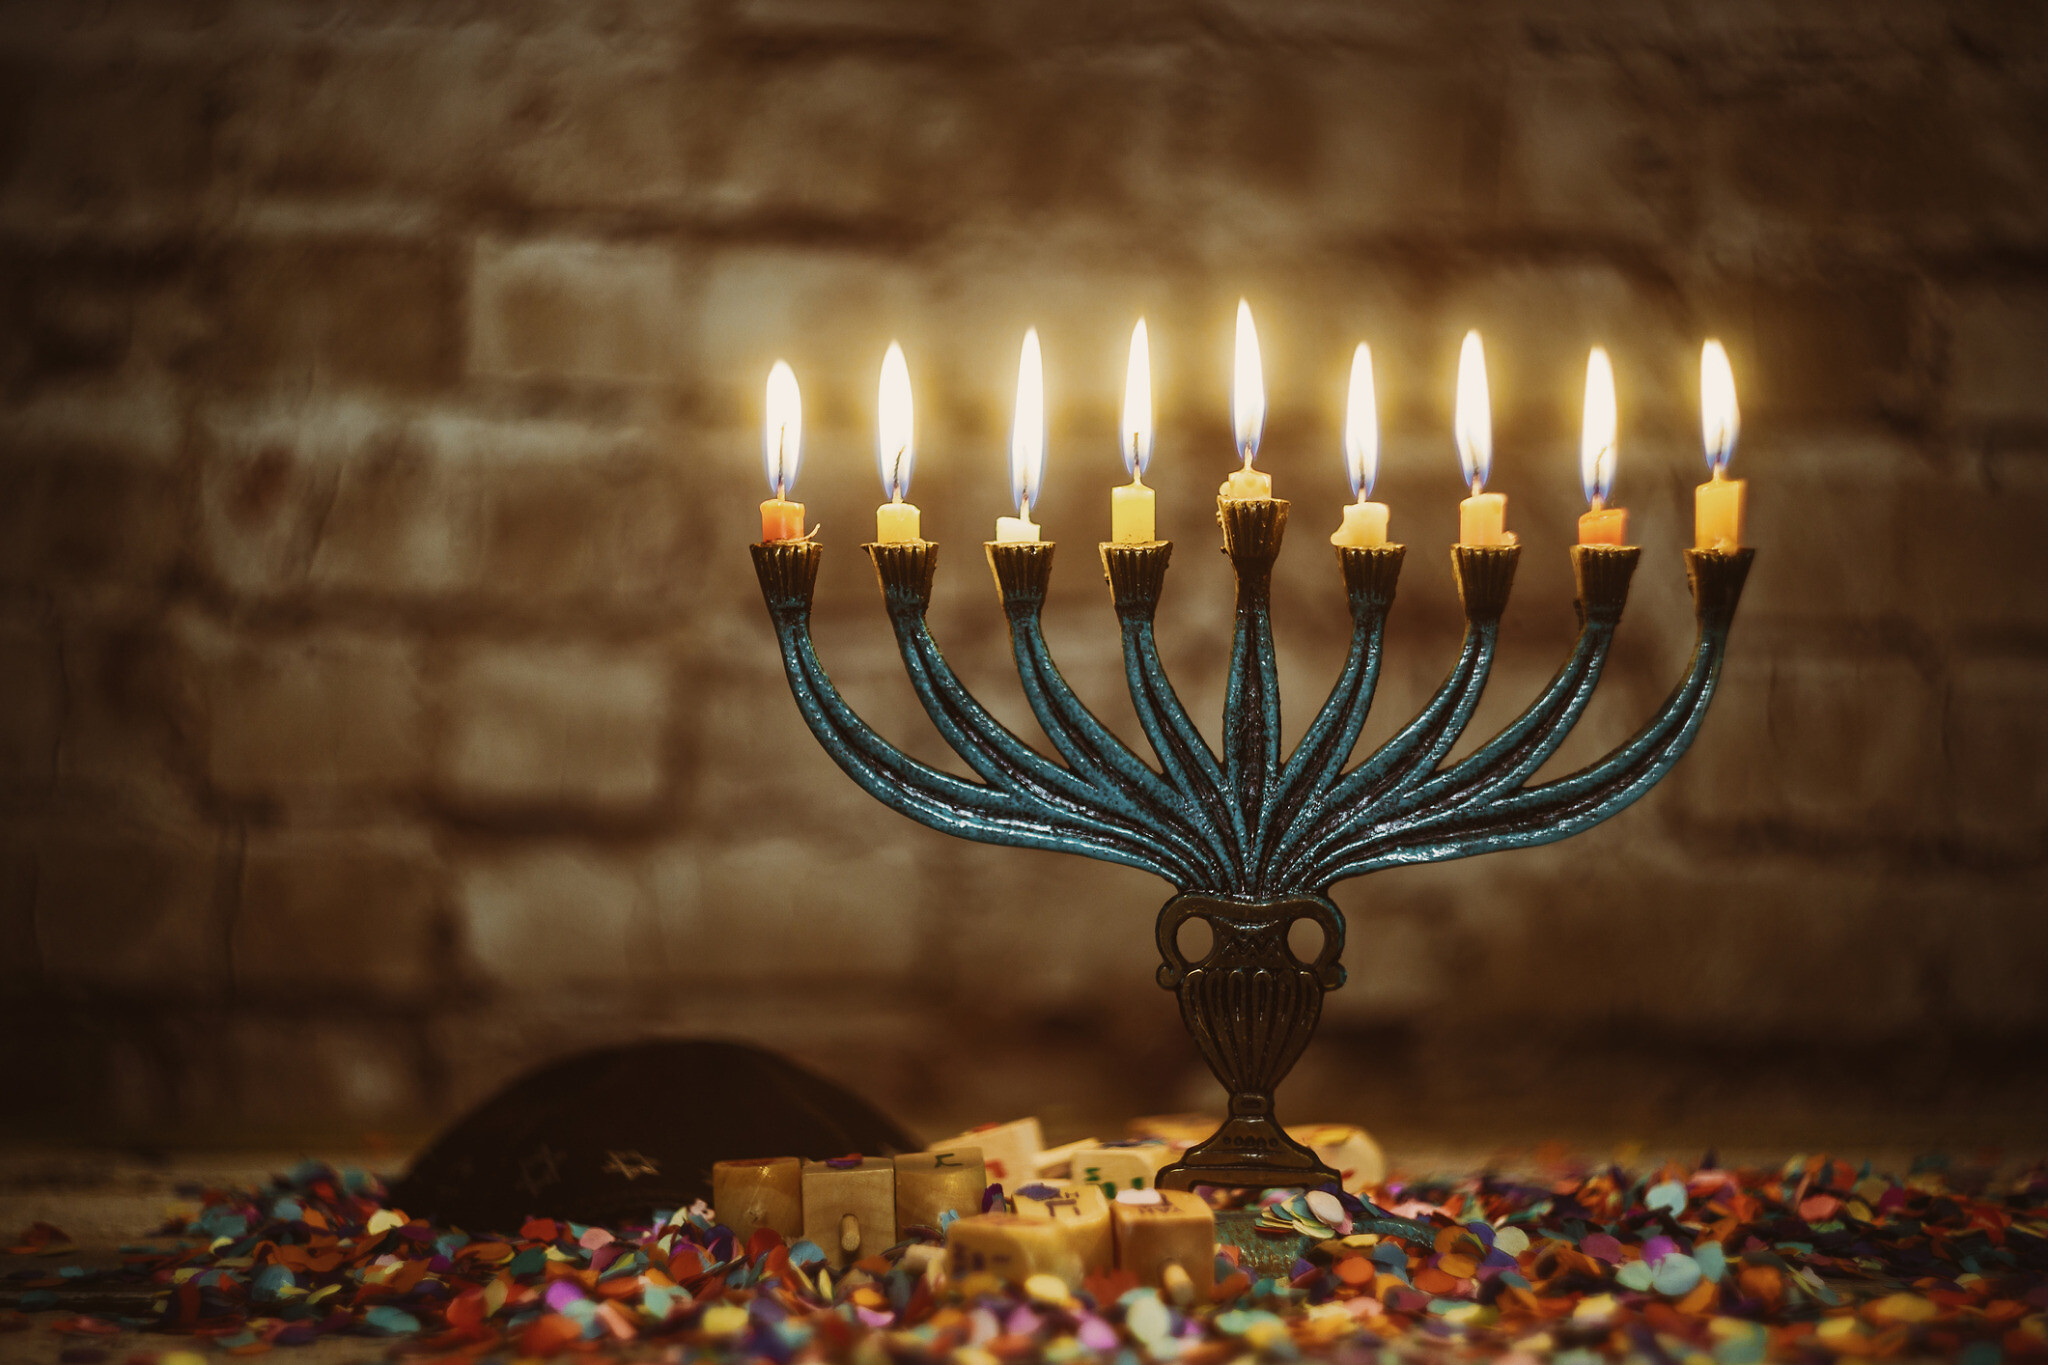 Bright idea lets Jewish studies conference in Boston light menorah